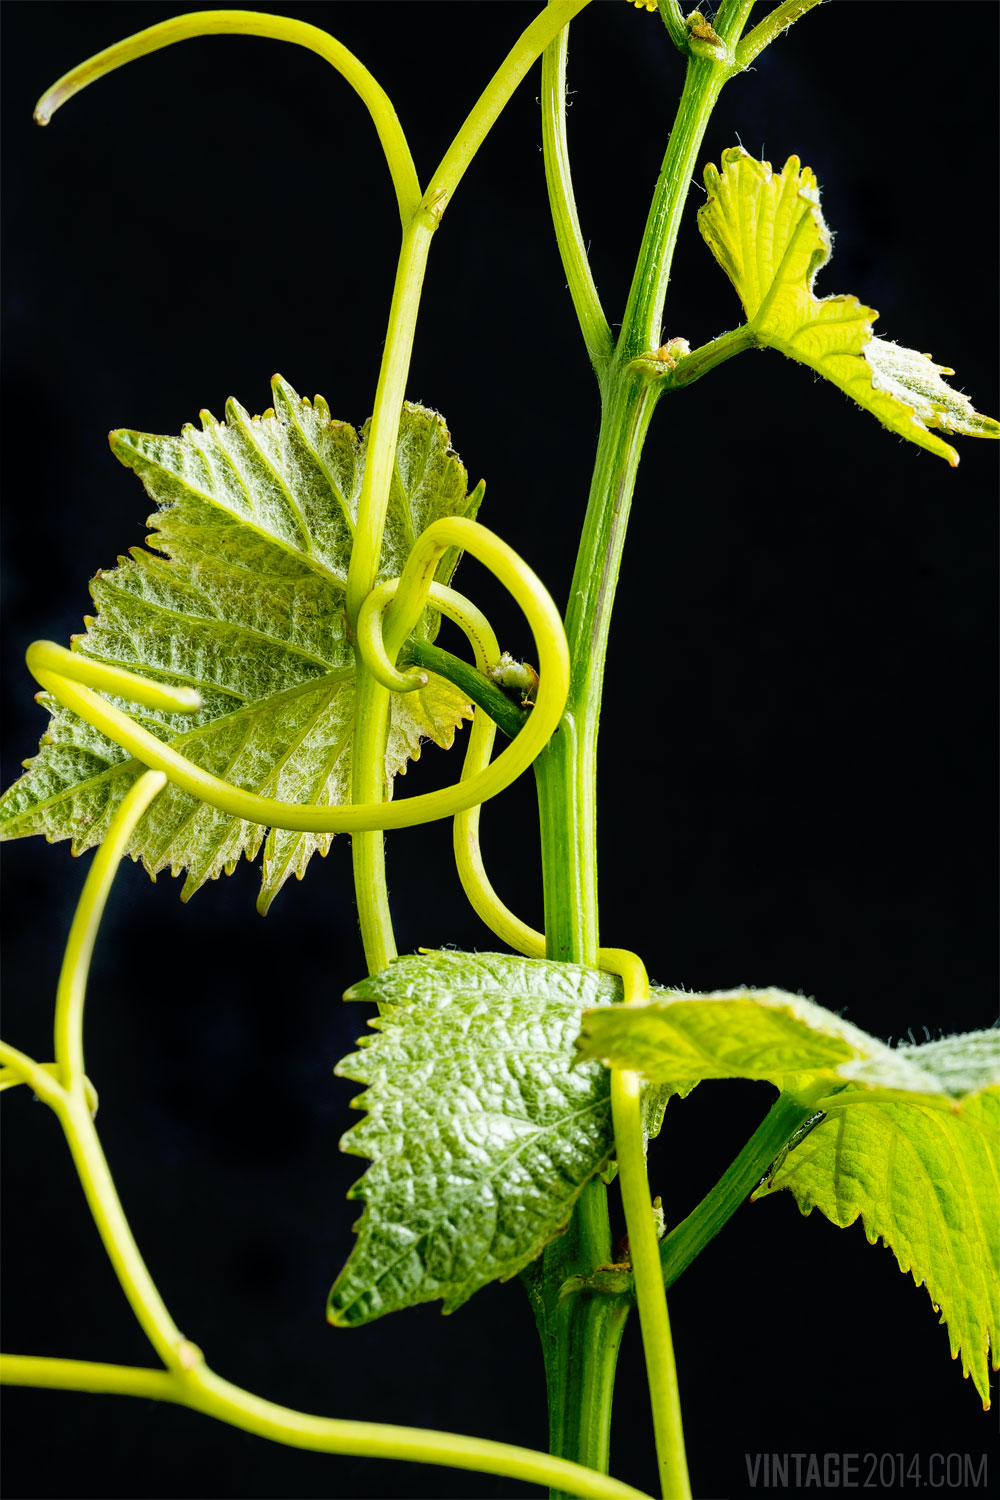 grape vine tendrils